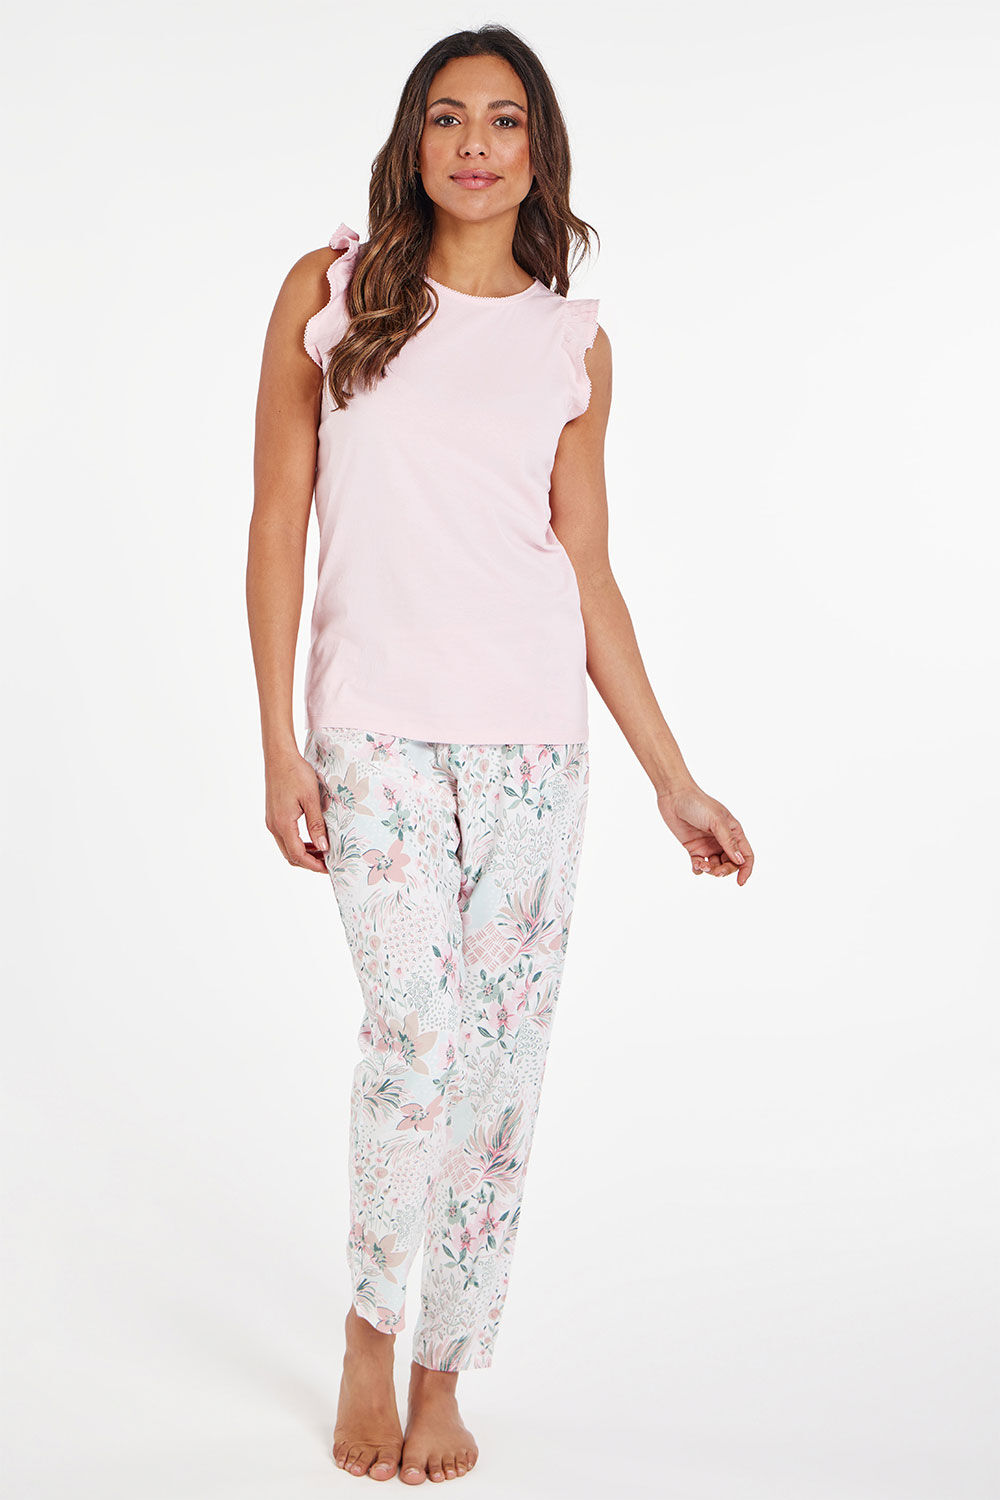 Bonmarche Mint Sleeveless Frill Detail Floral Print Pyjama Set, Size: 24-26